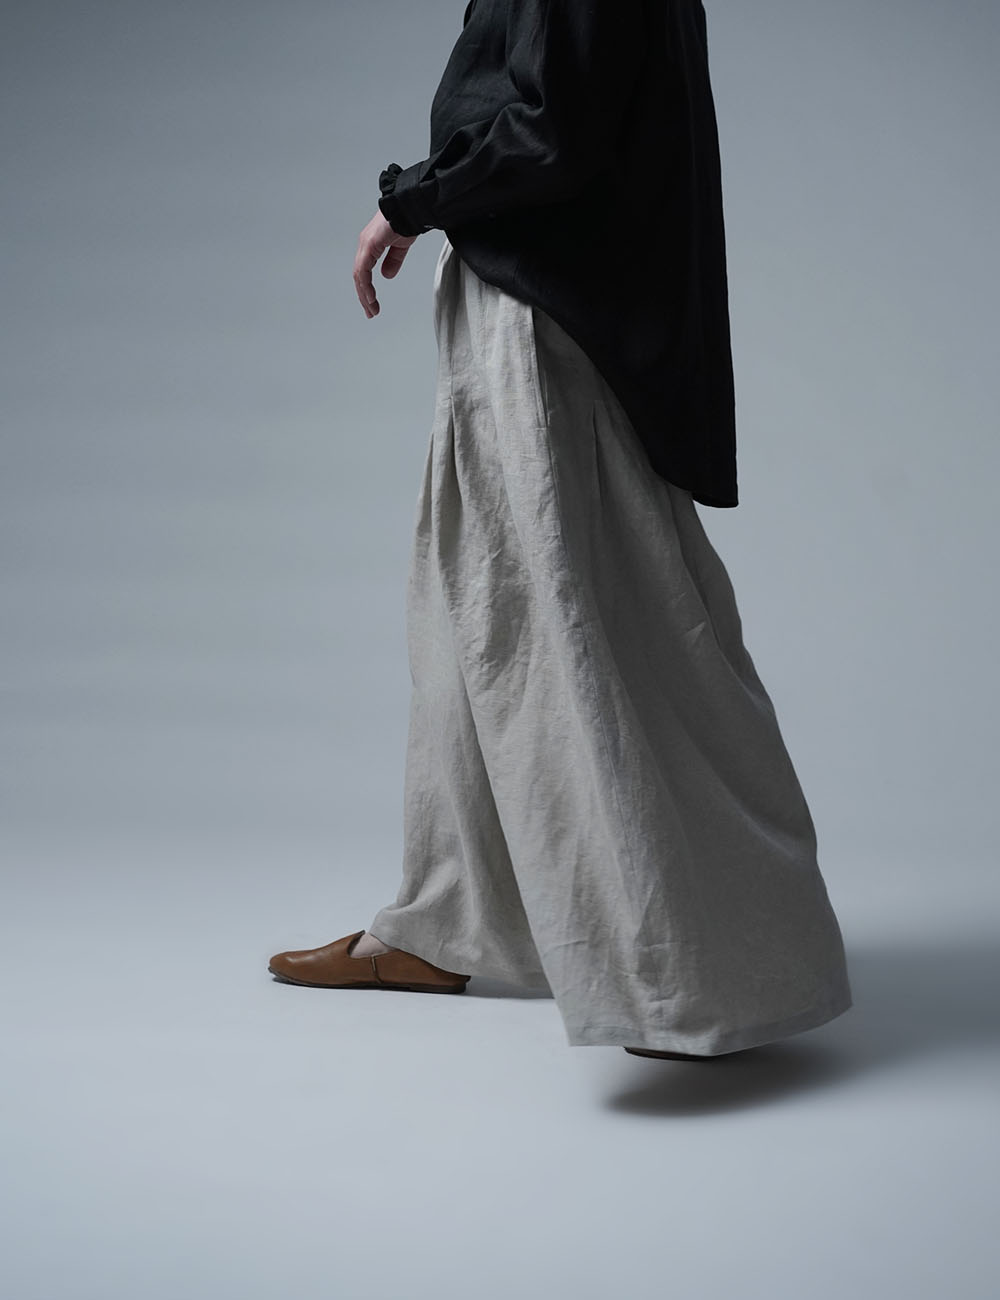 【wafu】Linen Pants 袴(はかま)パンツ/亜麻ナチュラル b002k-amn1